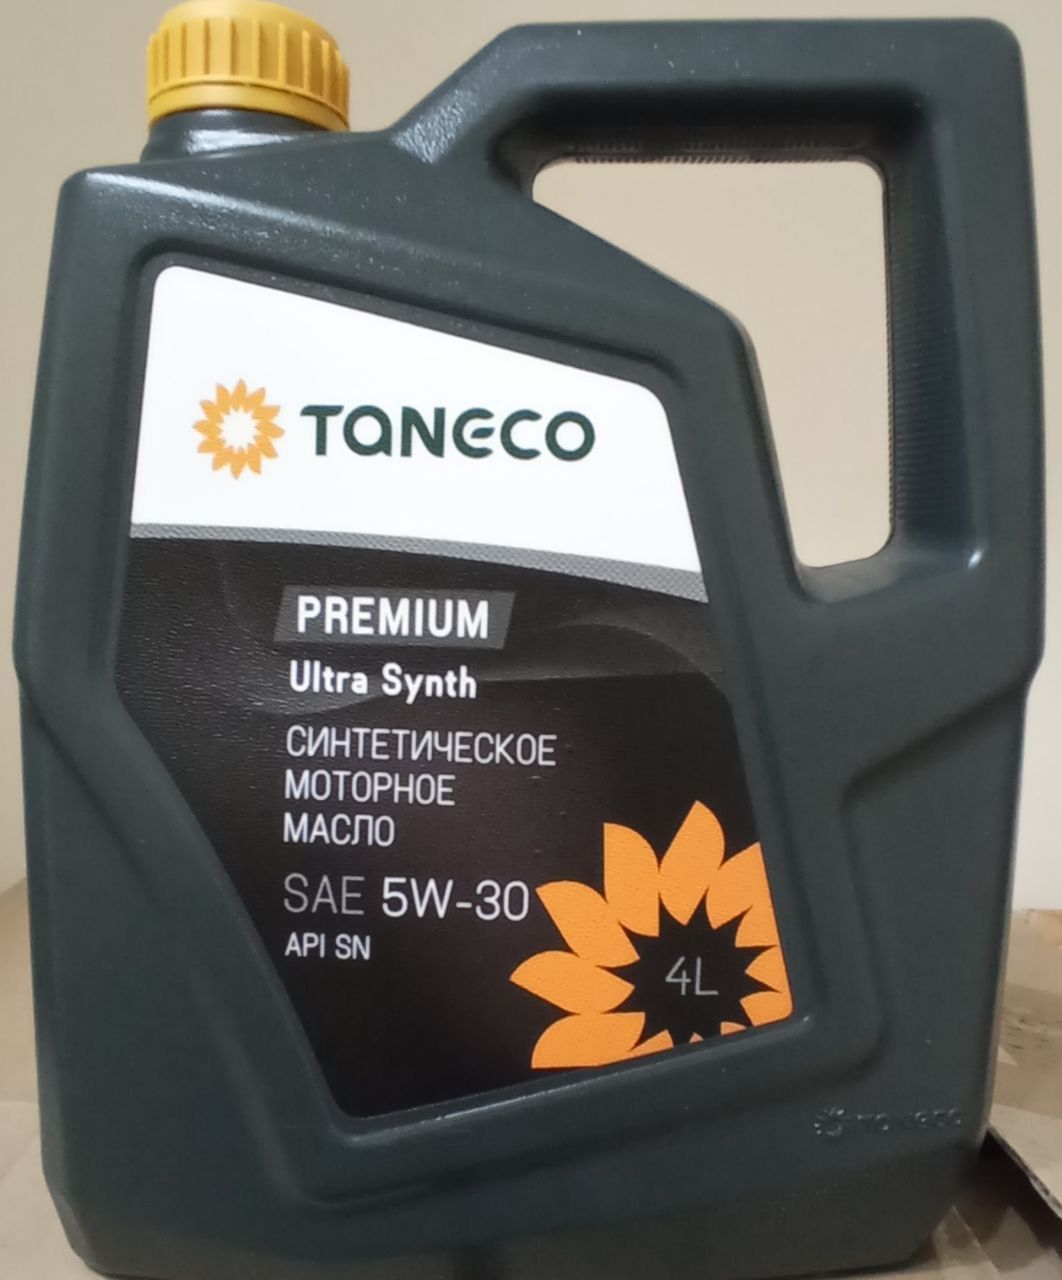 Масло taneco premium ultra synth. Taneco 5w30 Premium Ultra. Taneco Premium Ultra Synth SAE 5w-30. Масло моторное fam Ultra Sint 5w30. ТАНЕКО премиум ультра синт 5w30 отзывы.